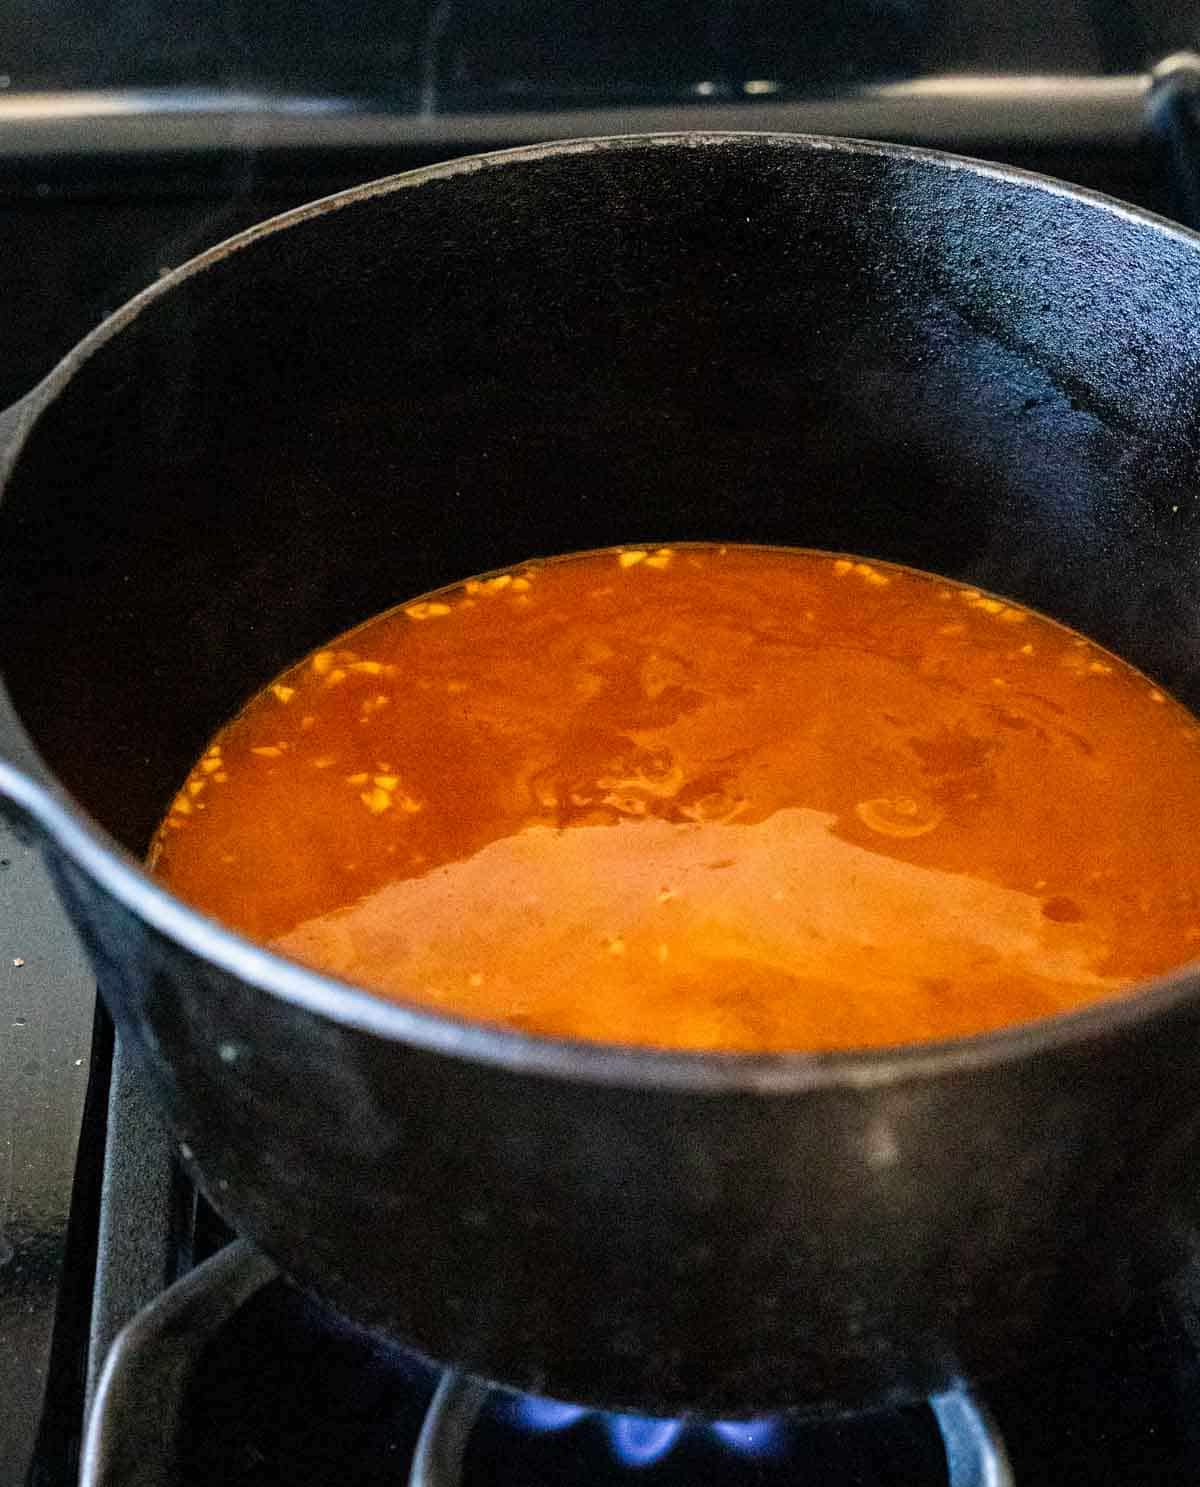 a pot of orange liquid